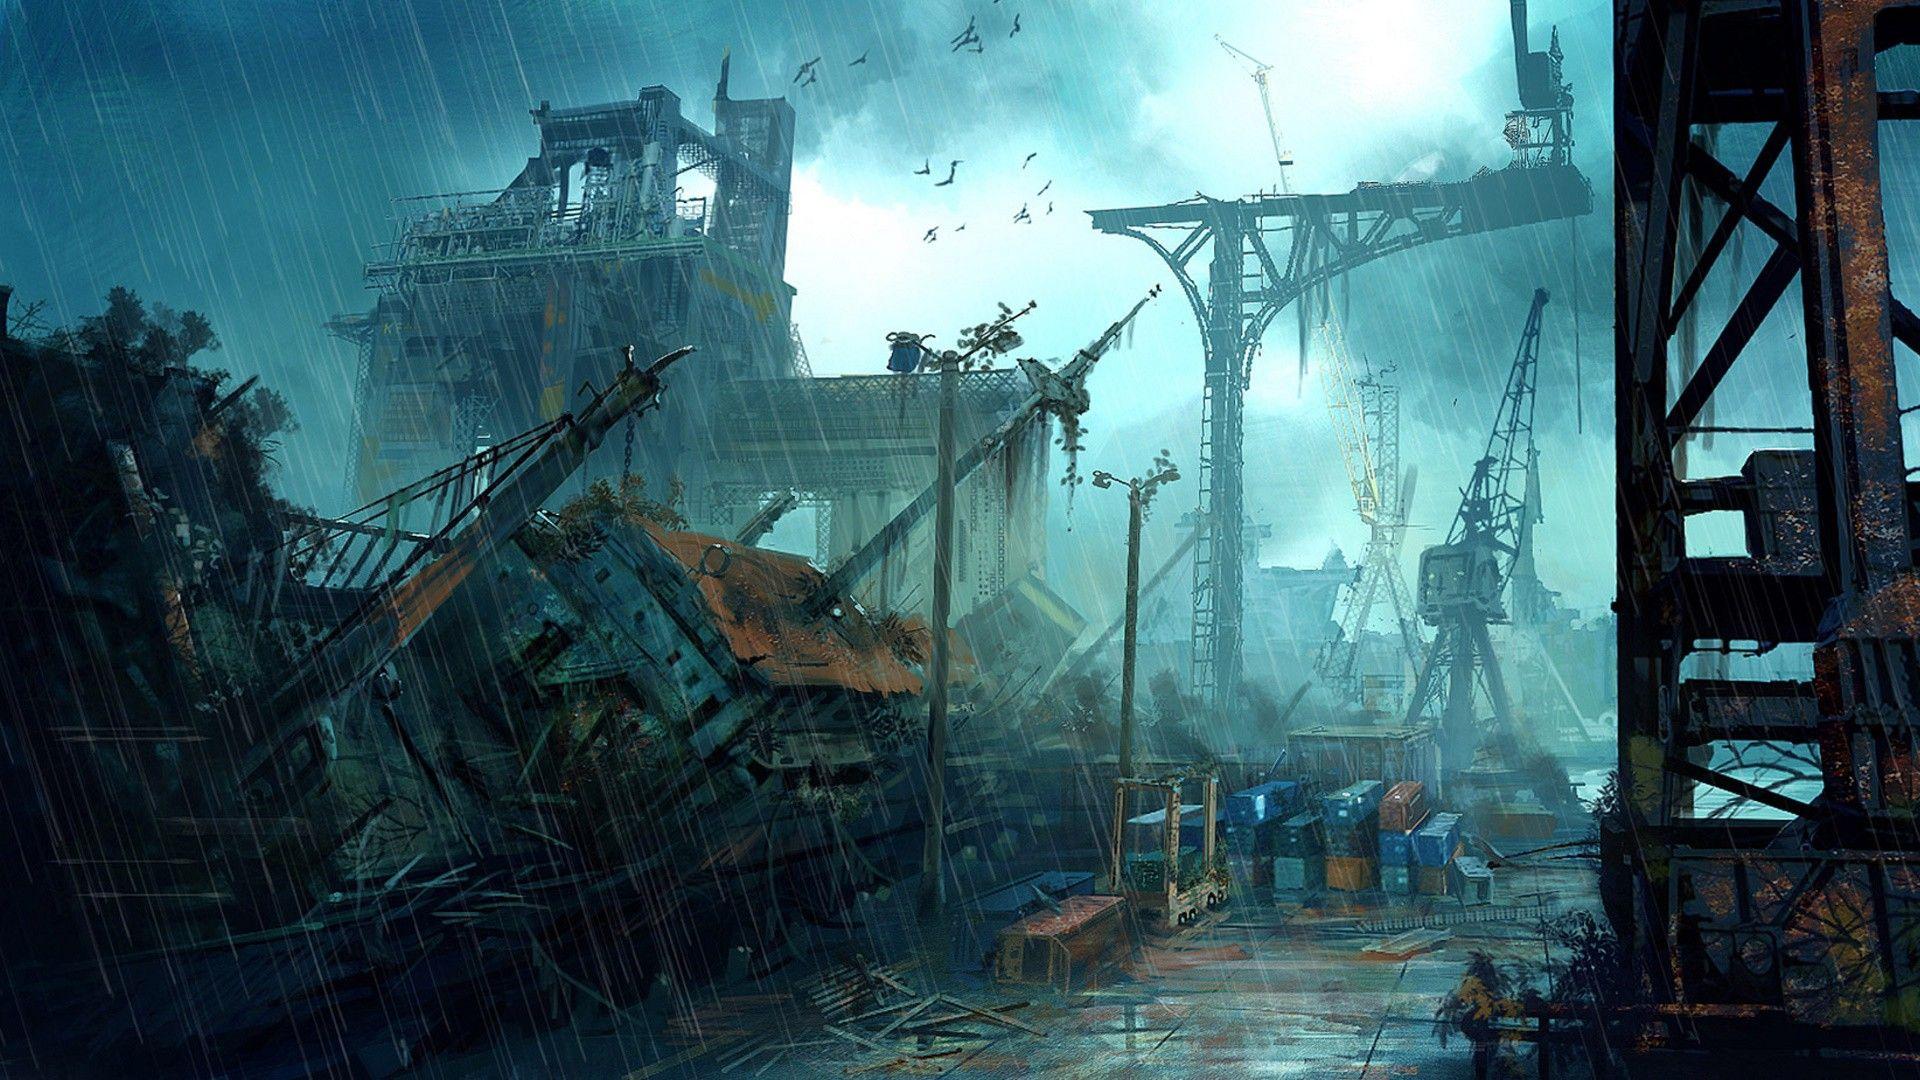 Fantasy, Rain, Post Apocalyptic, Ships, Fantasy Art, Rust, Disasters